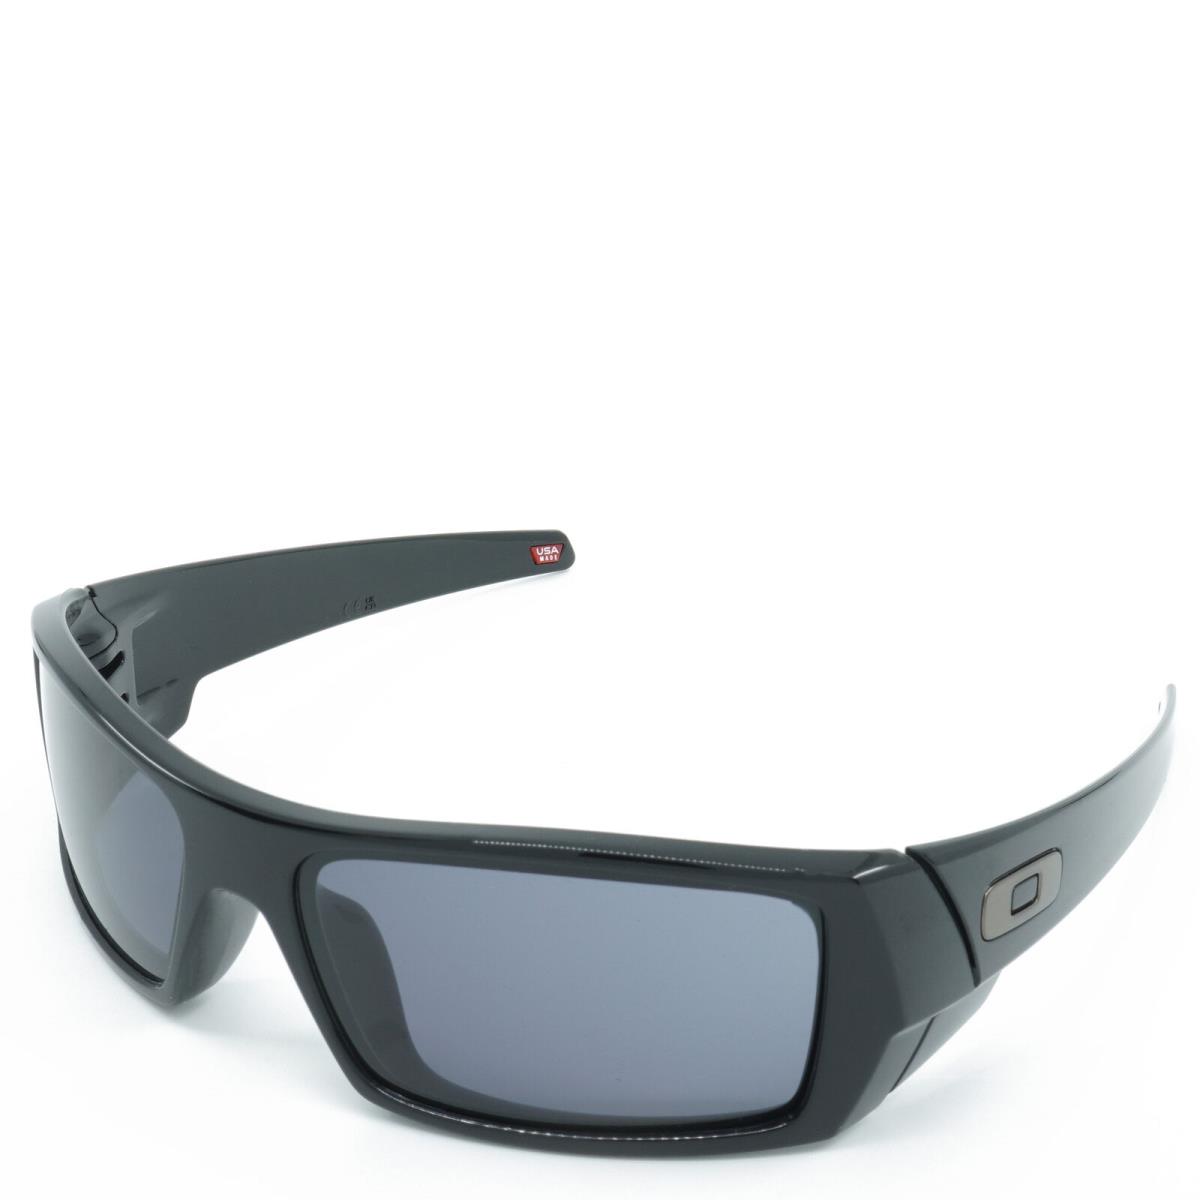 03-471 Mens Oakley Gascan Sunglasses